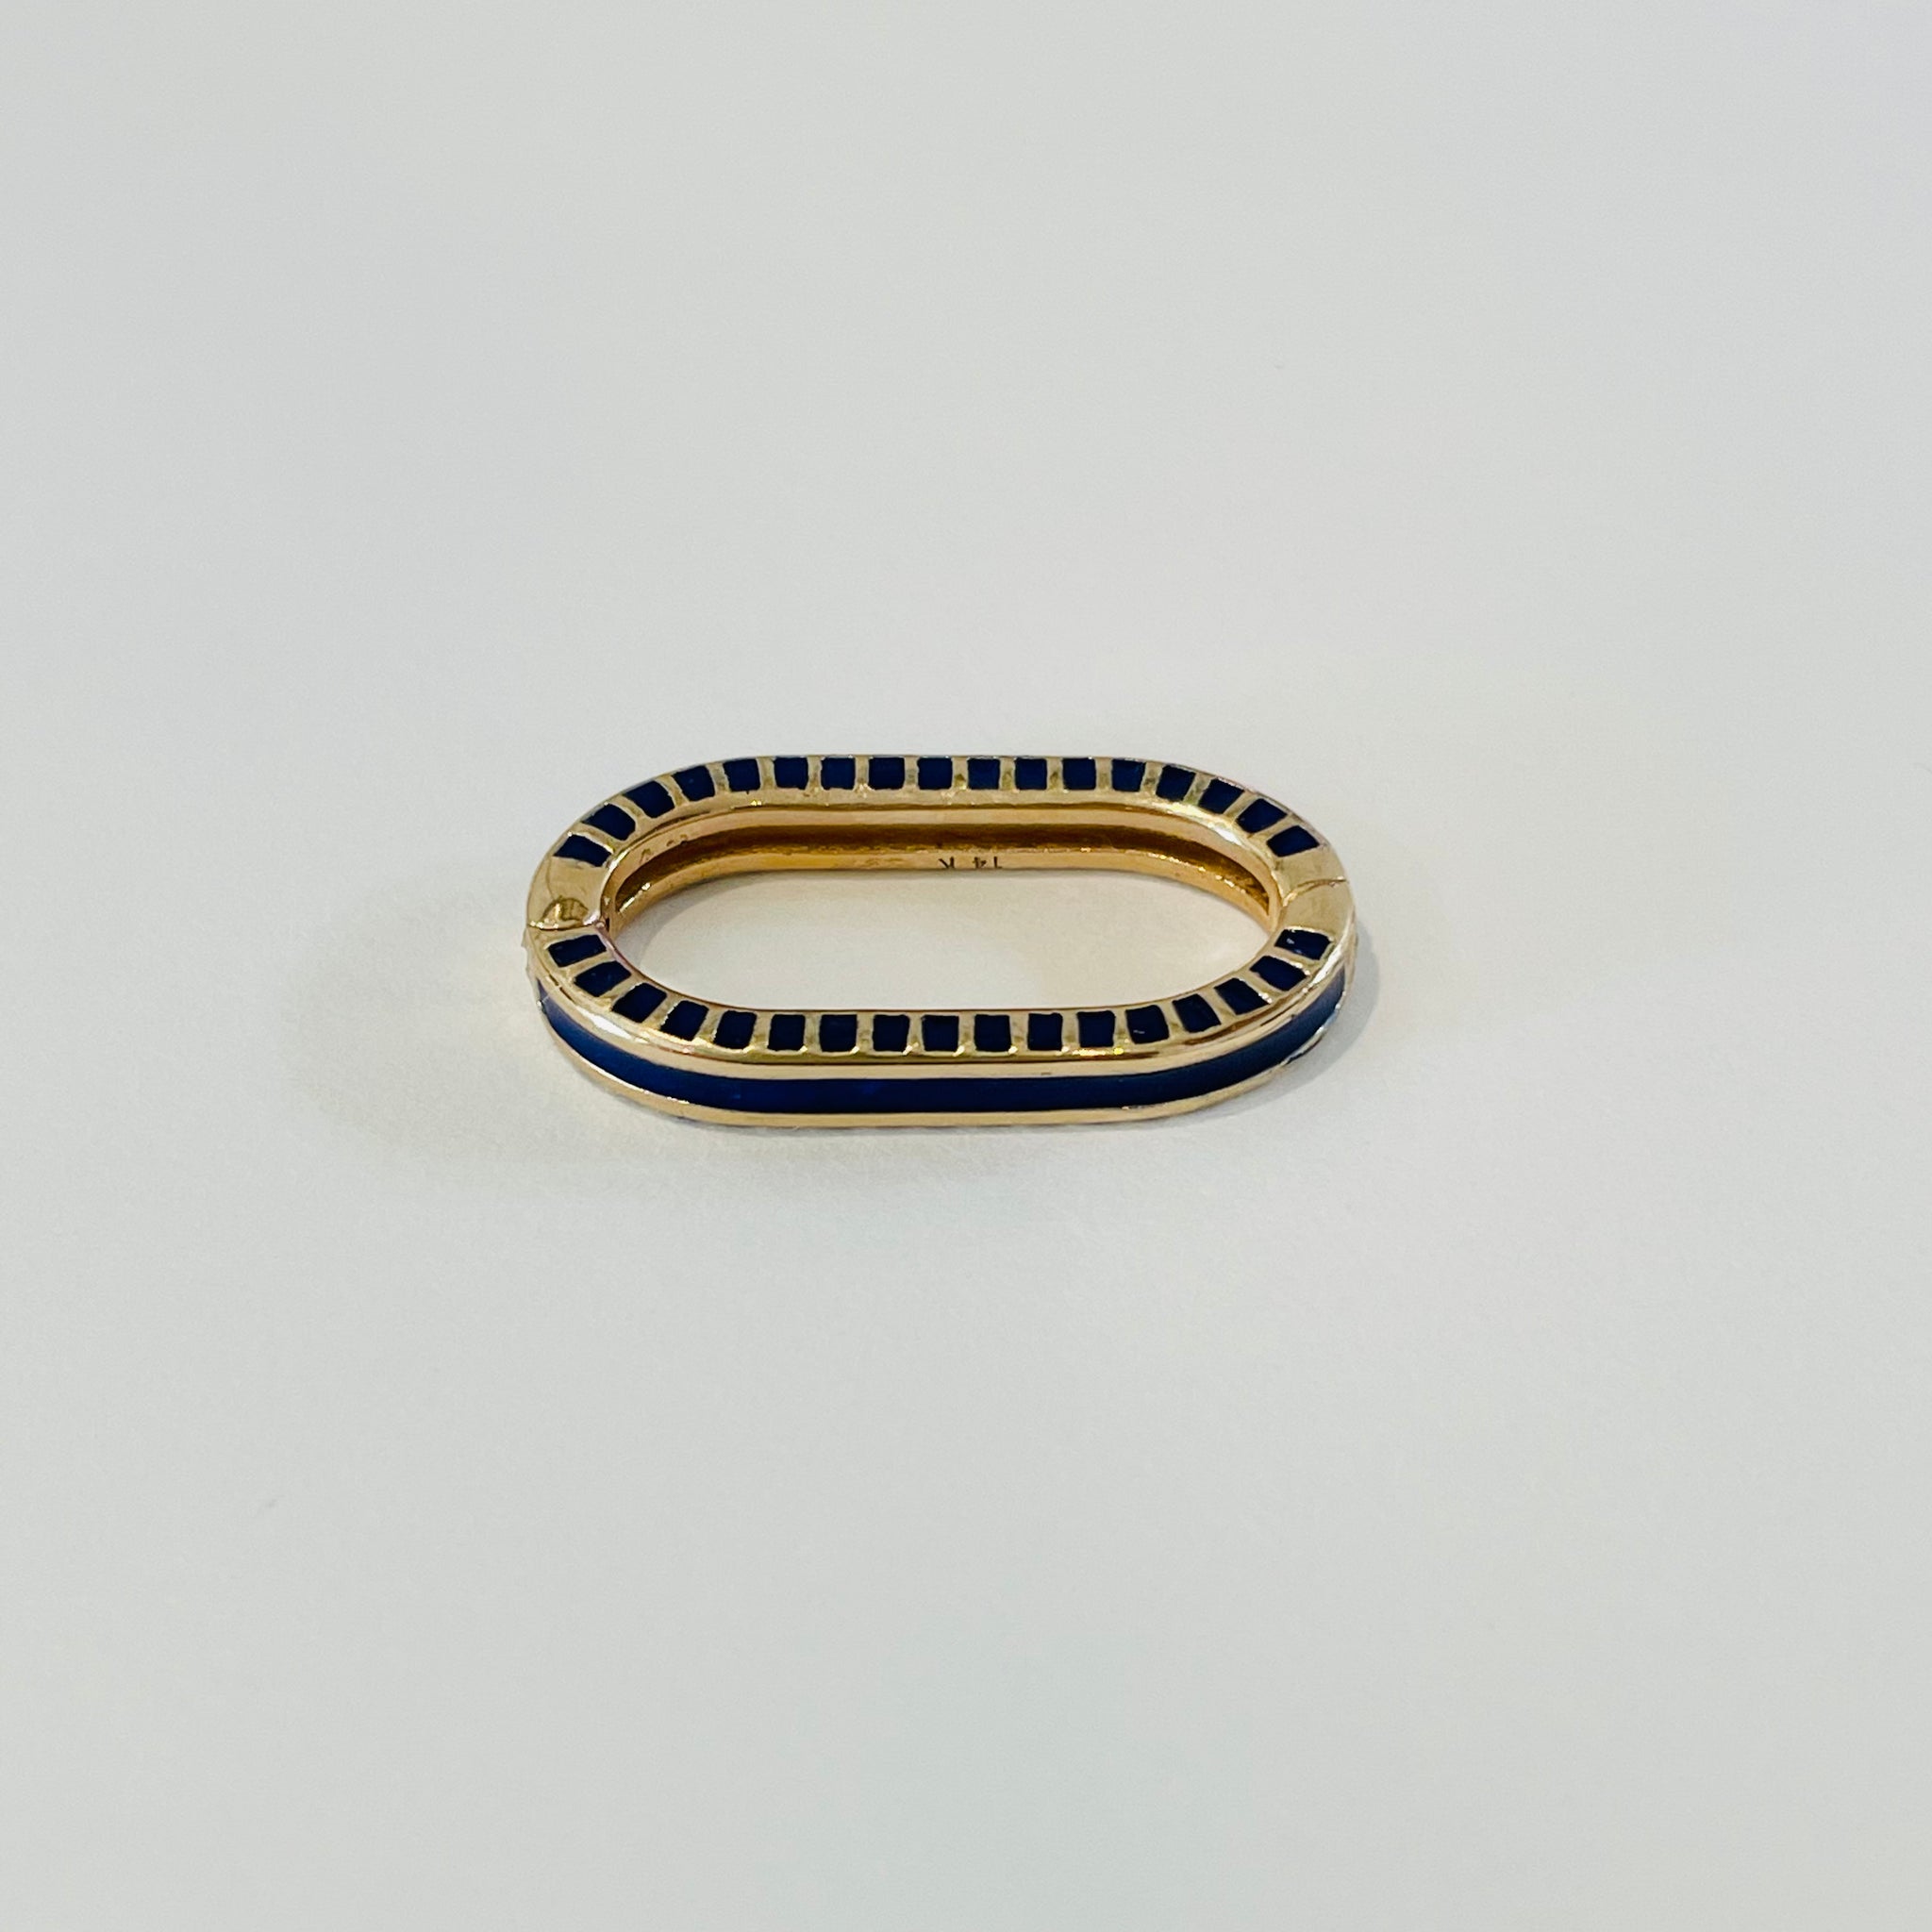 14 k gold, navy blue enamel connector